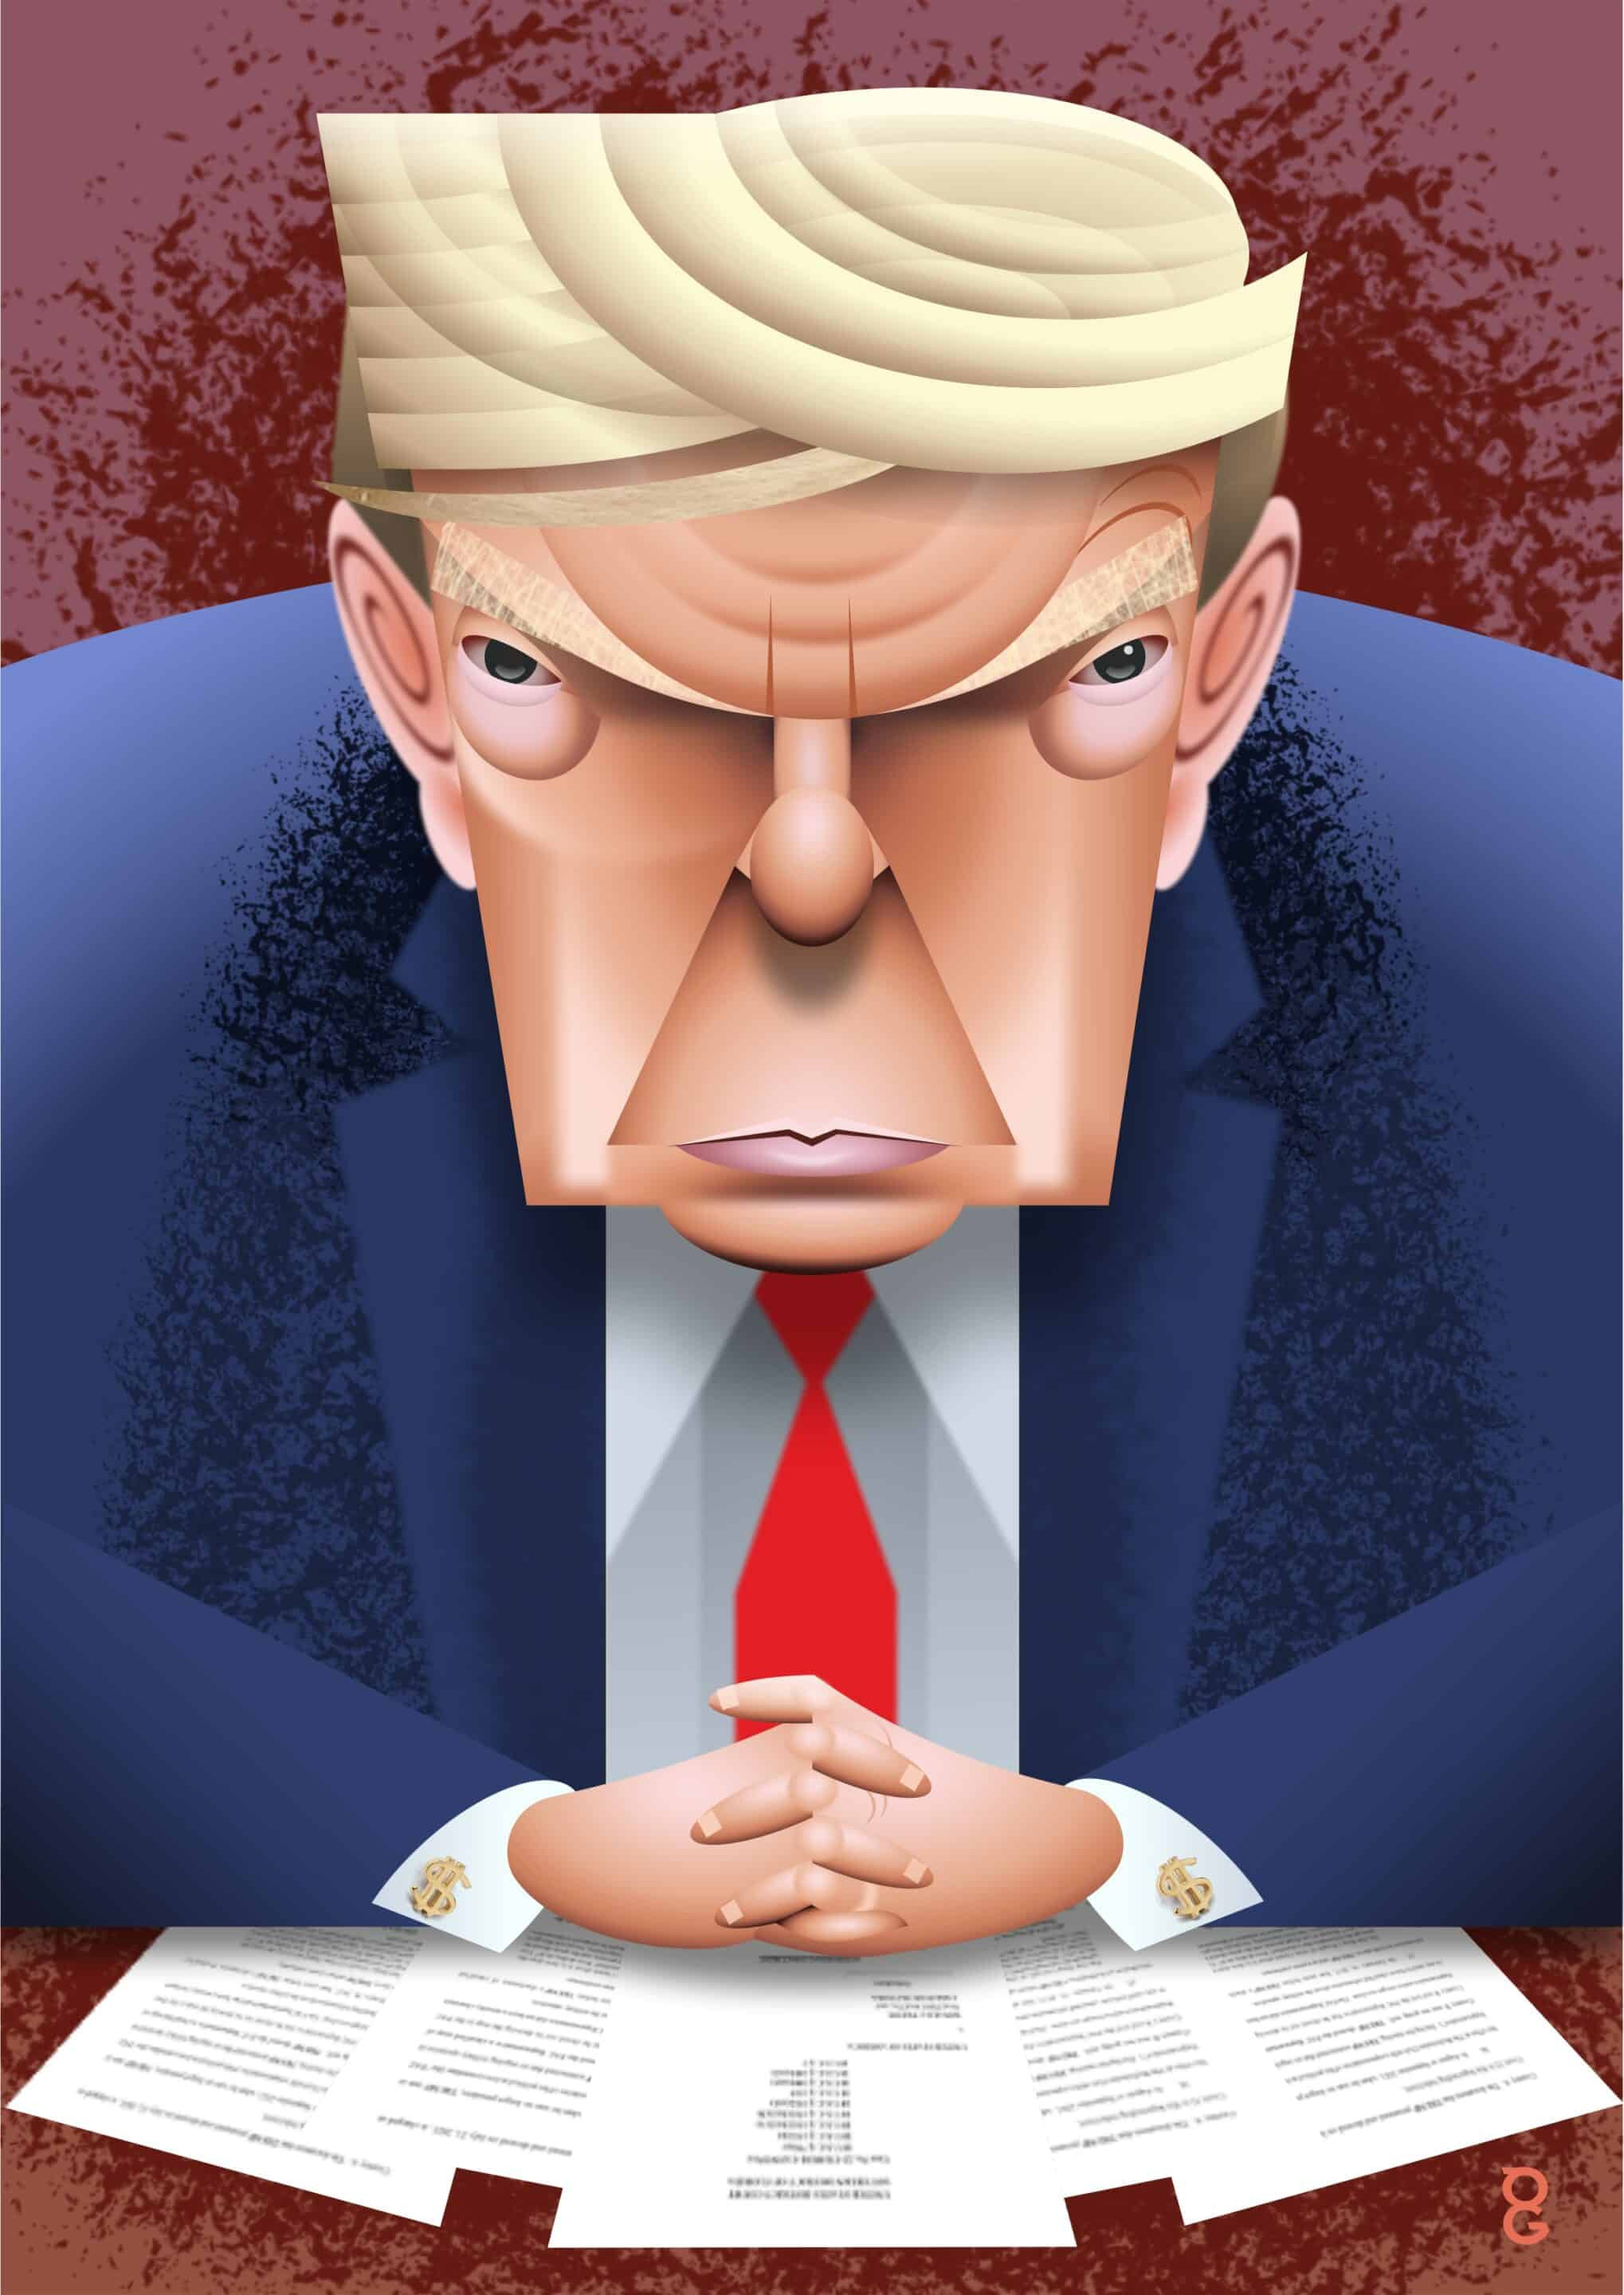 Donal Trump caricature